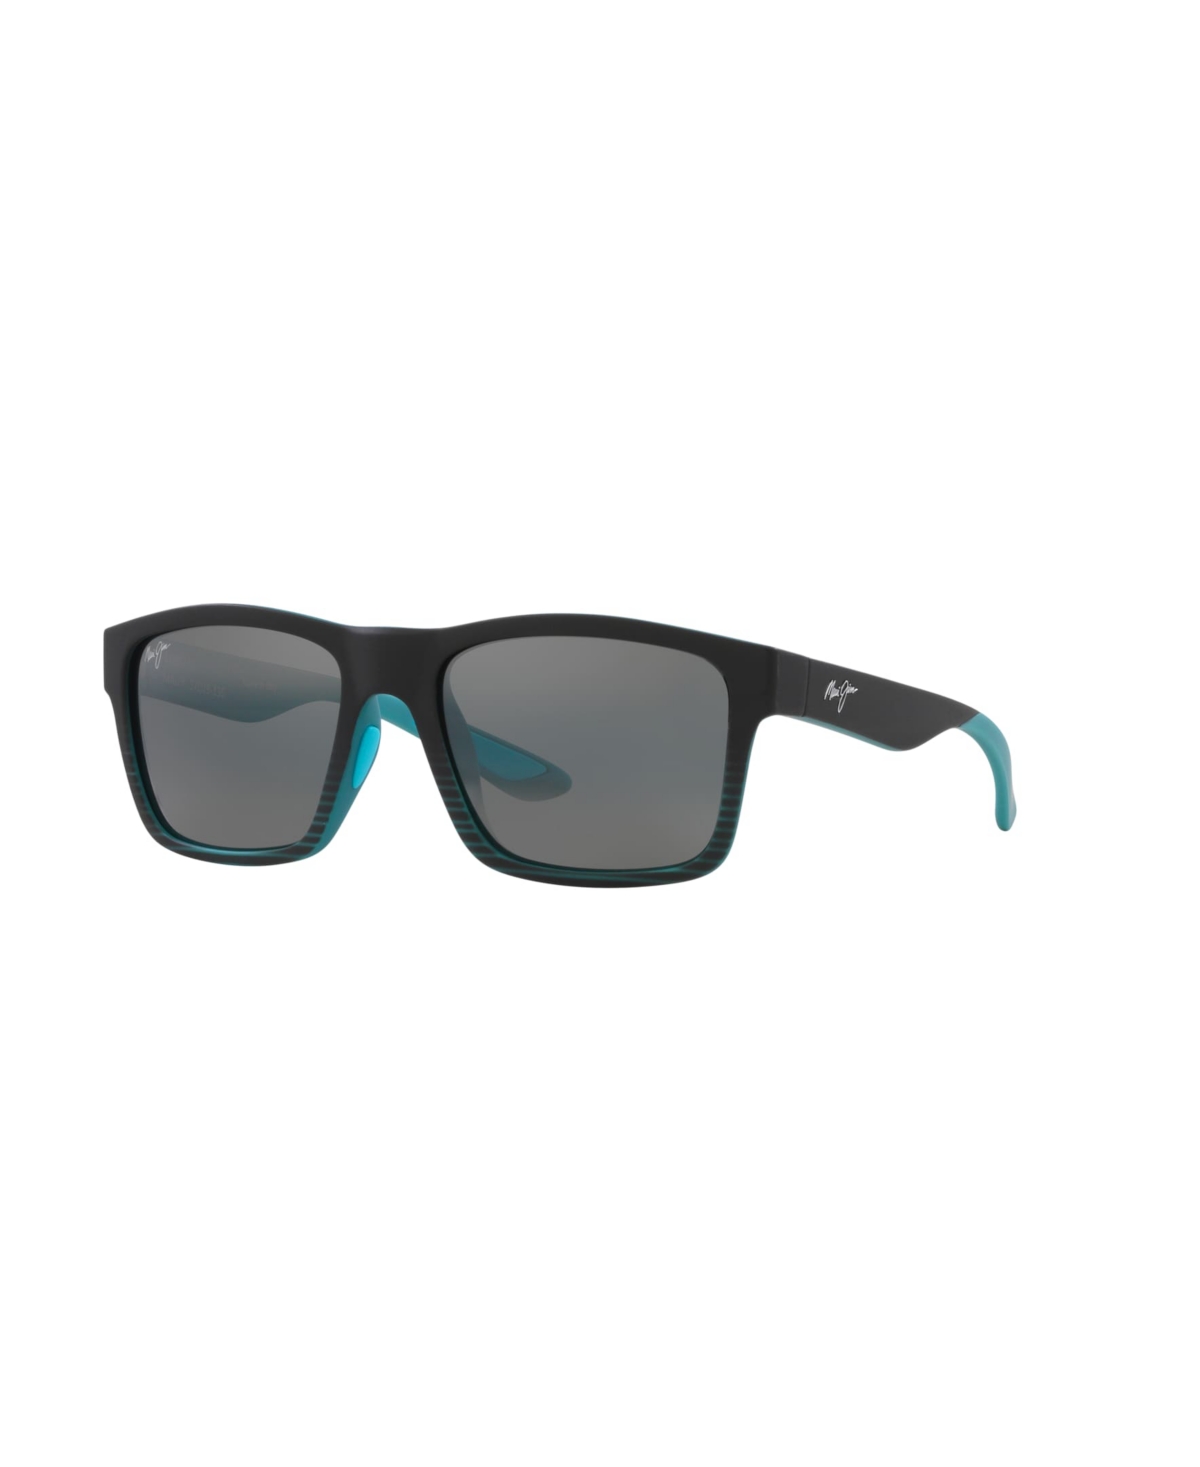 Unisex Polarized Sunglasses, The Flats Mj000738 - Brown Green